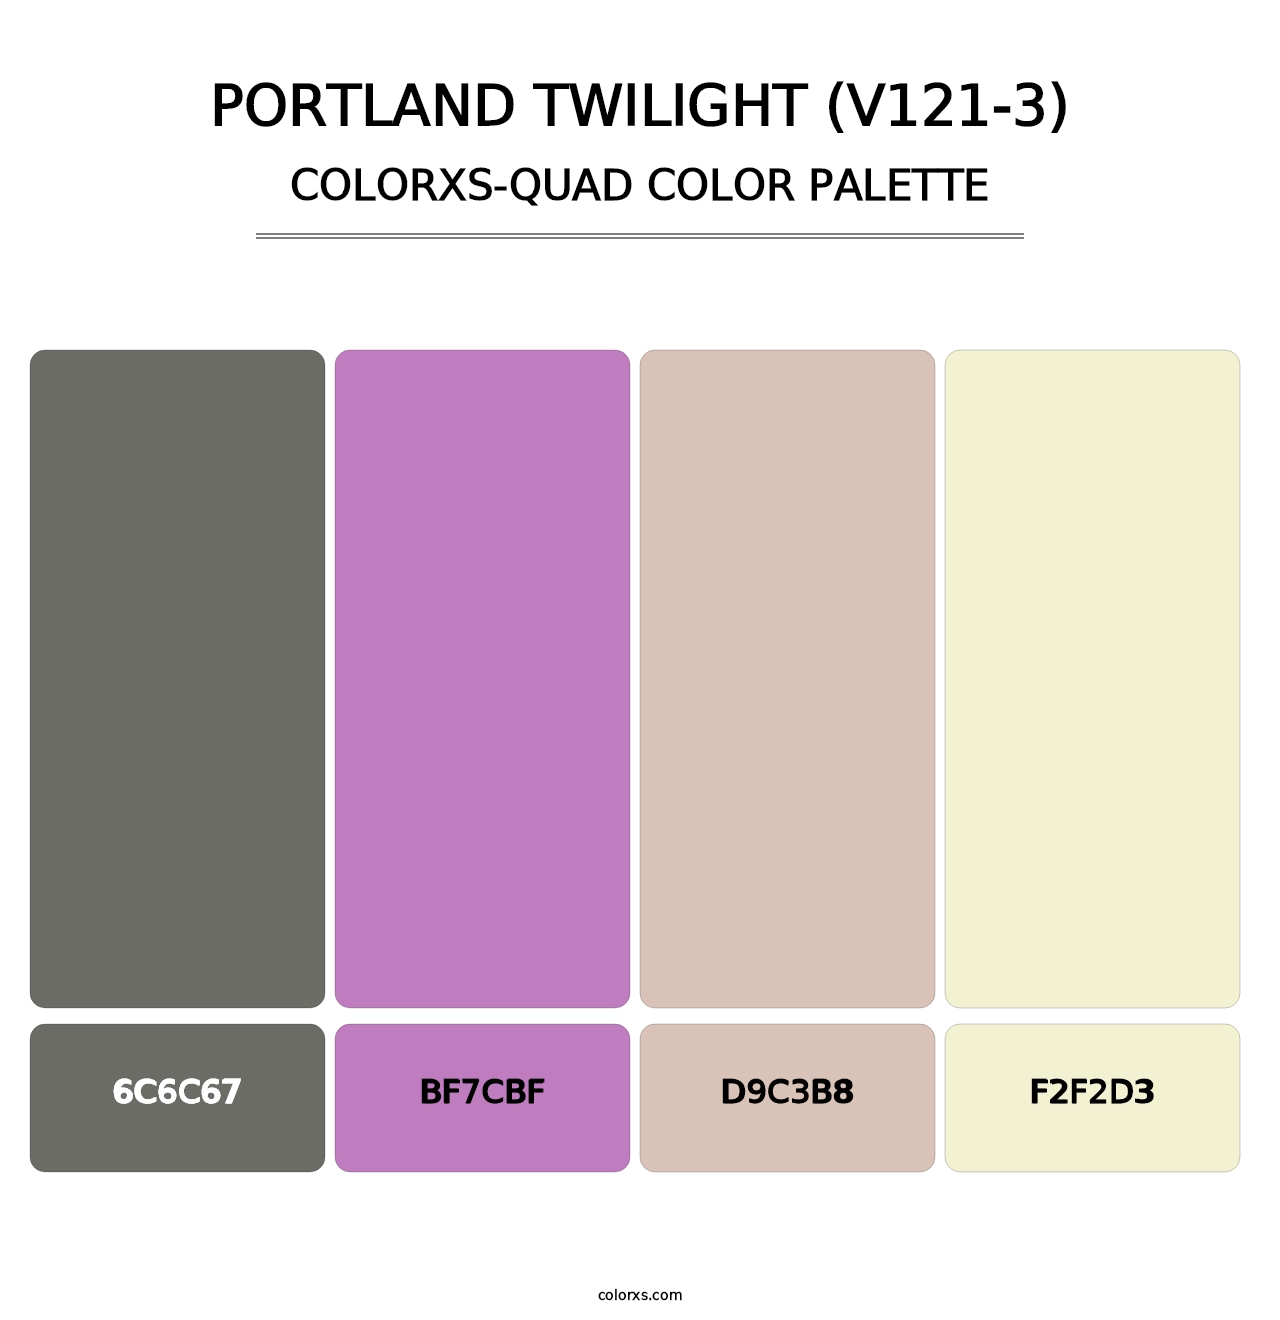 Portland Twilight (V121-3) - Colorxs Quad Palette